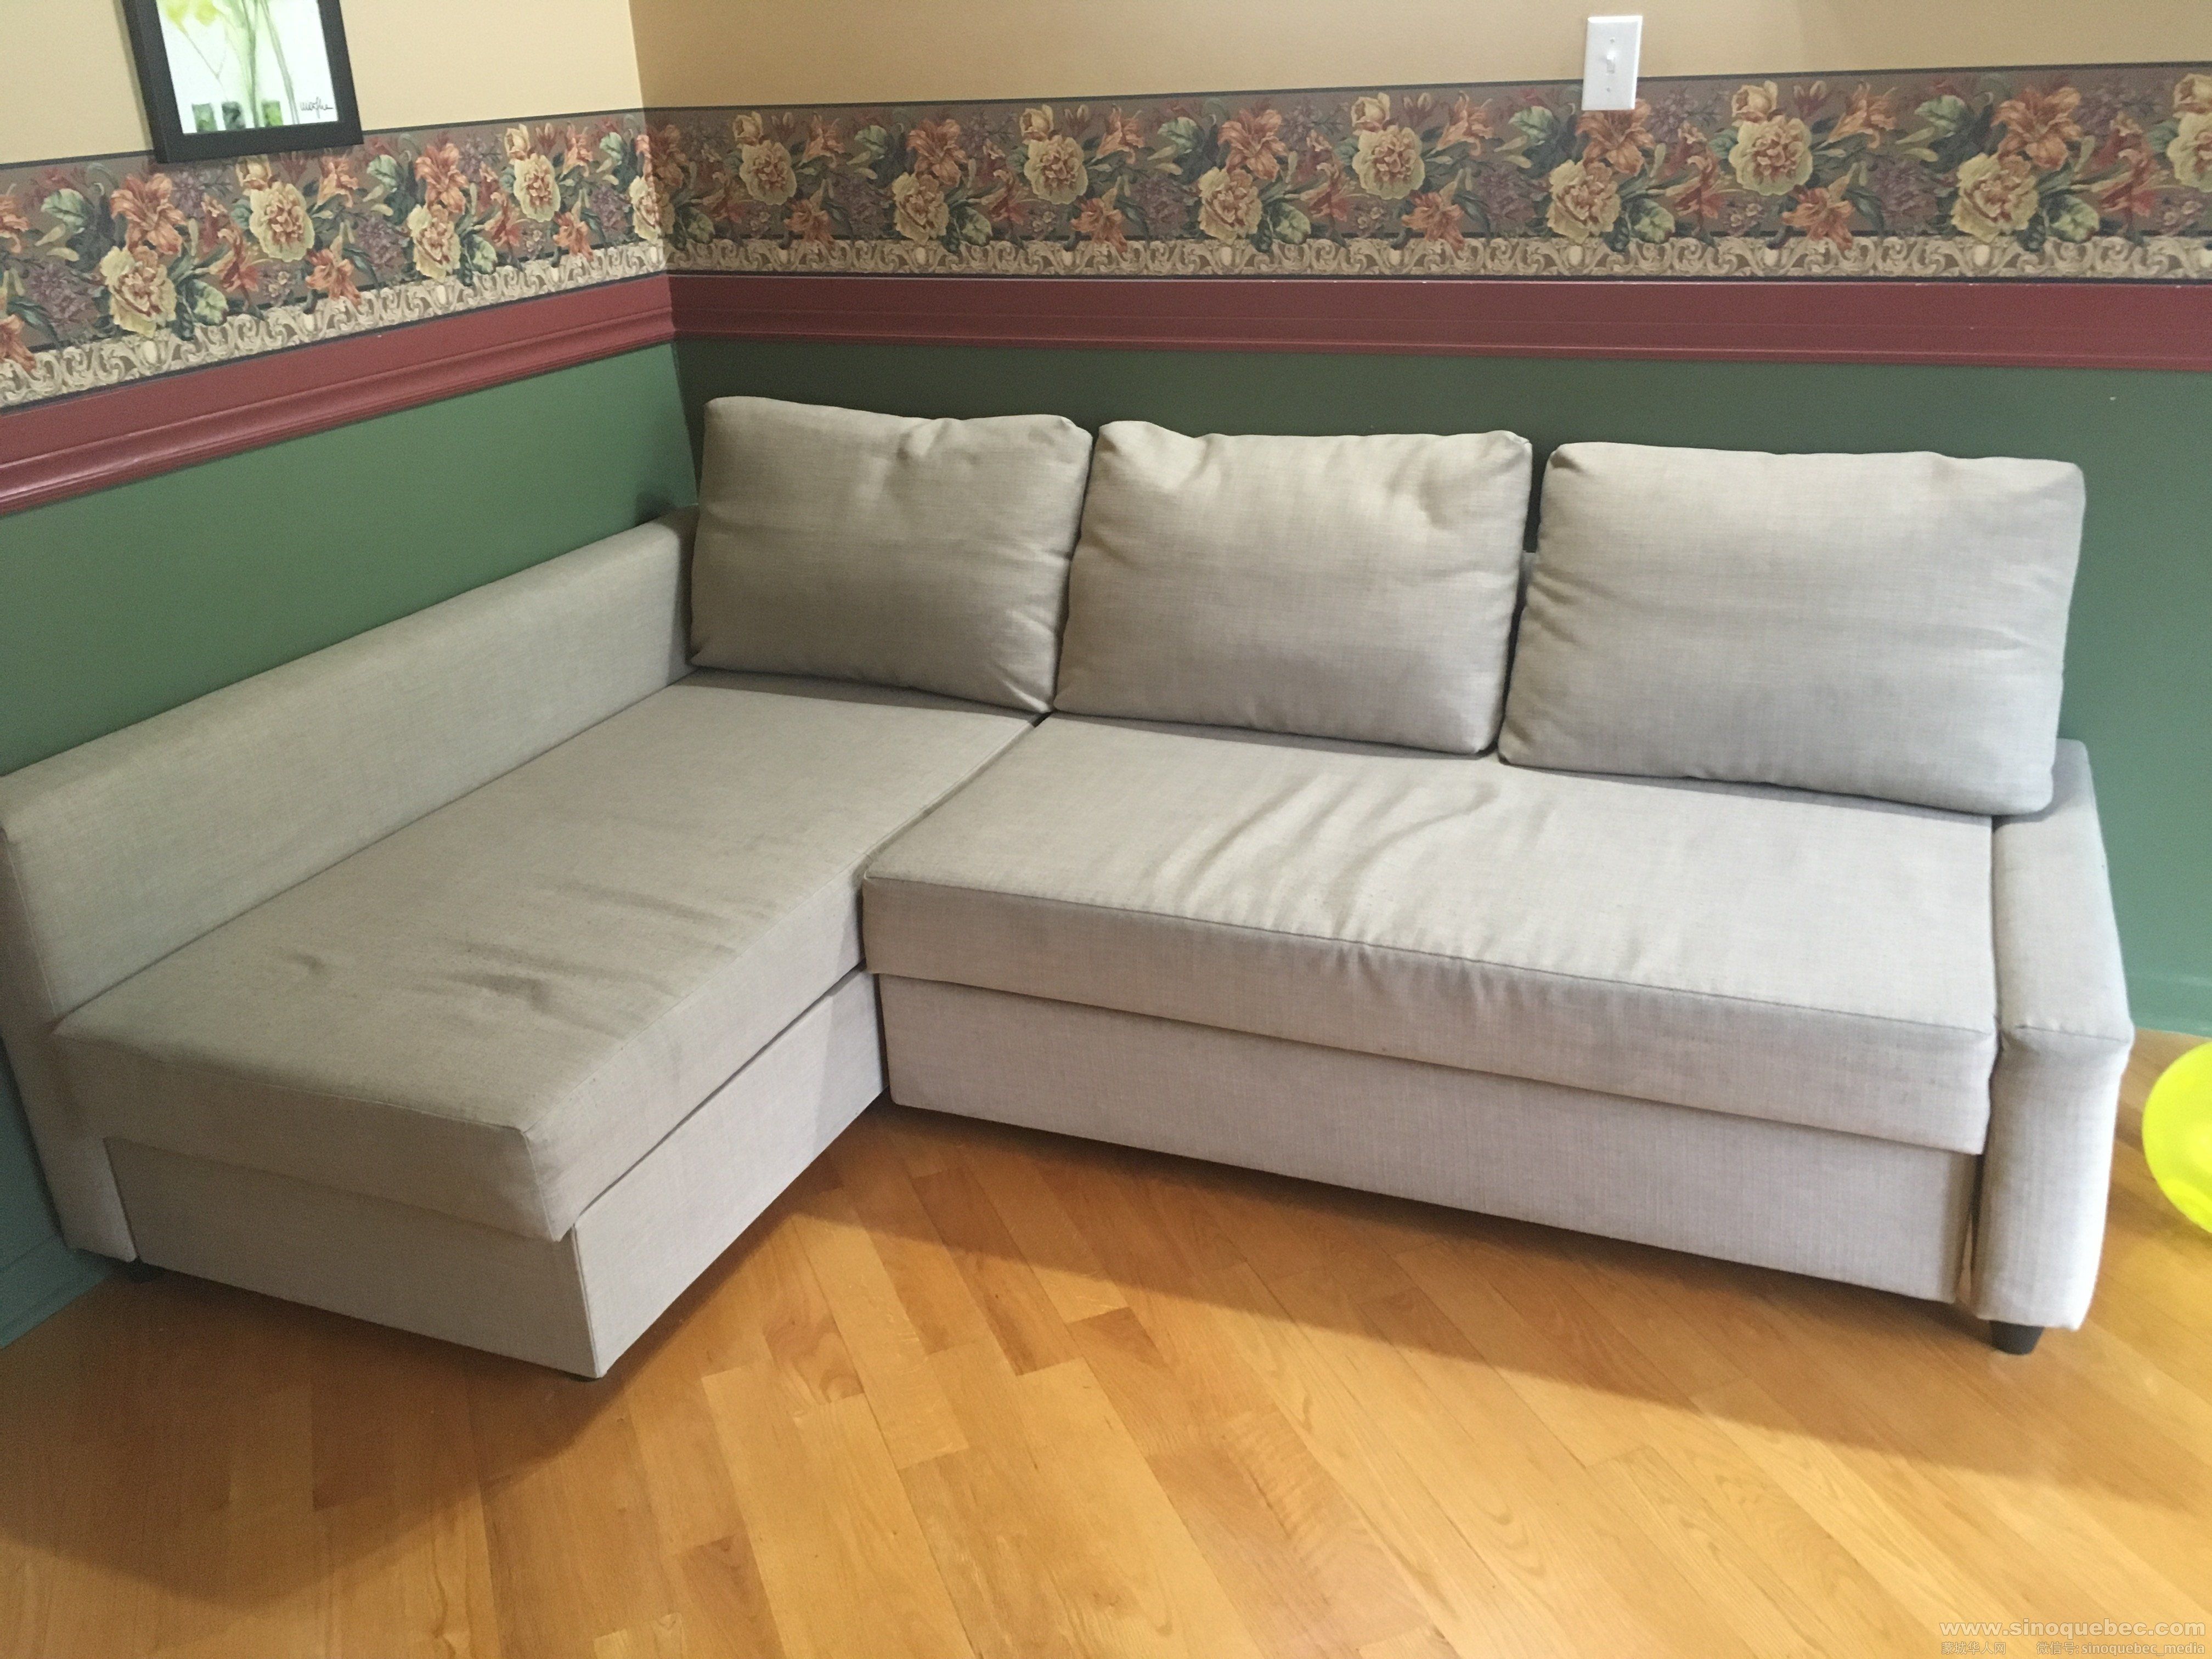 sofa bed1.JPG